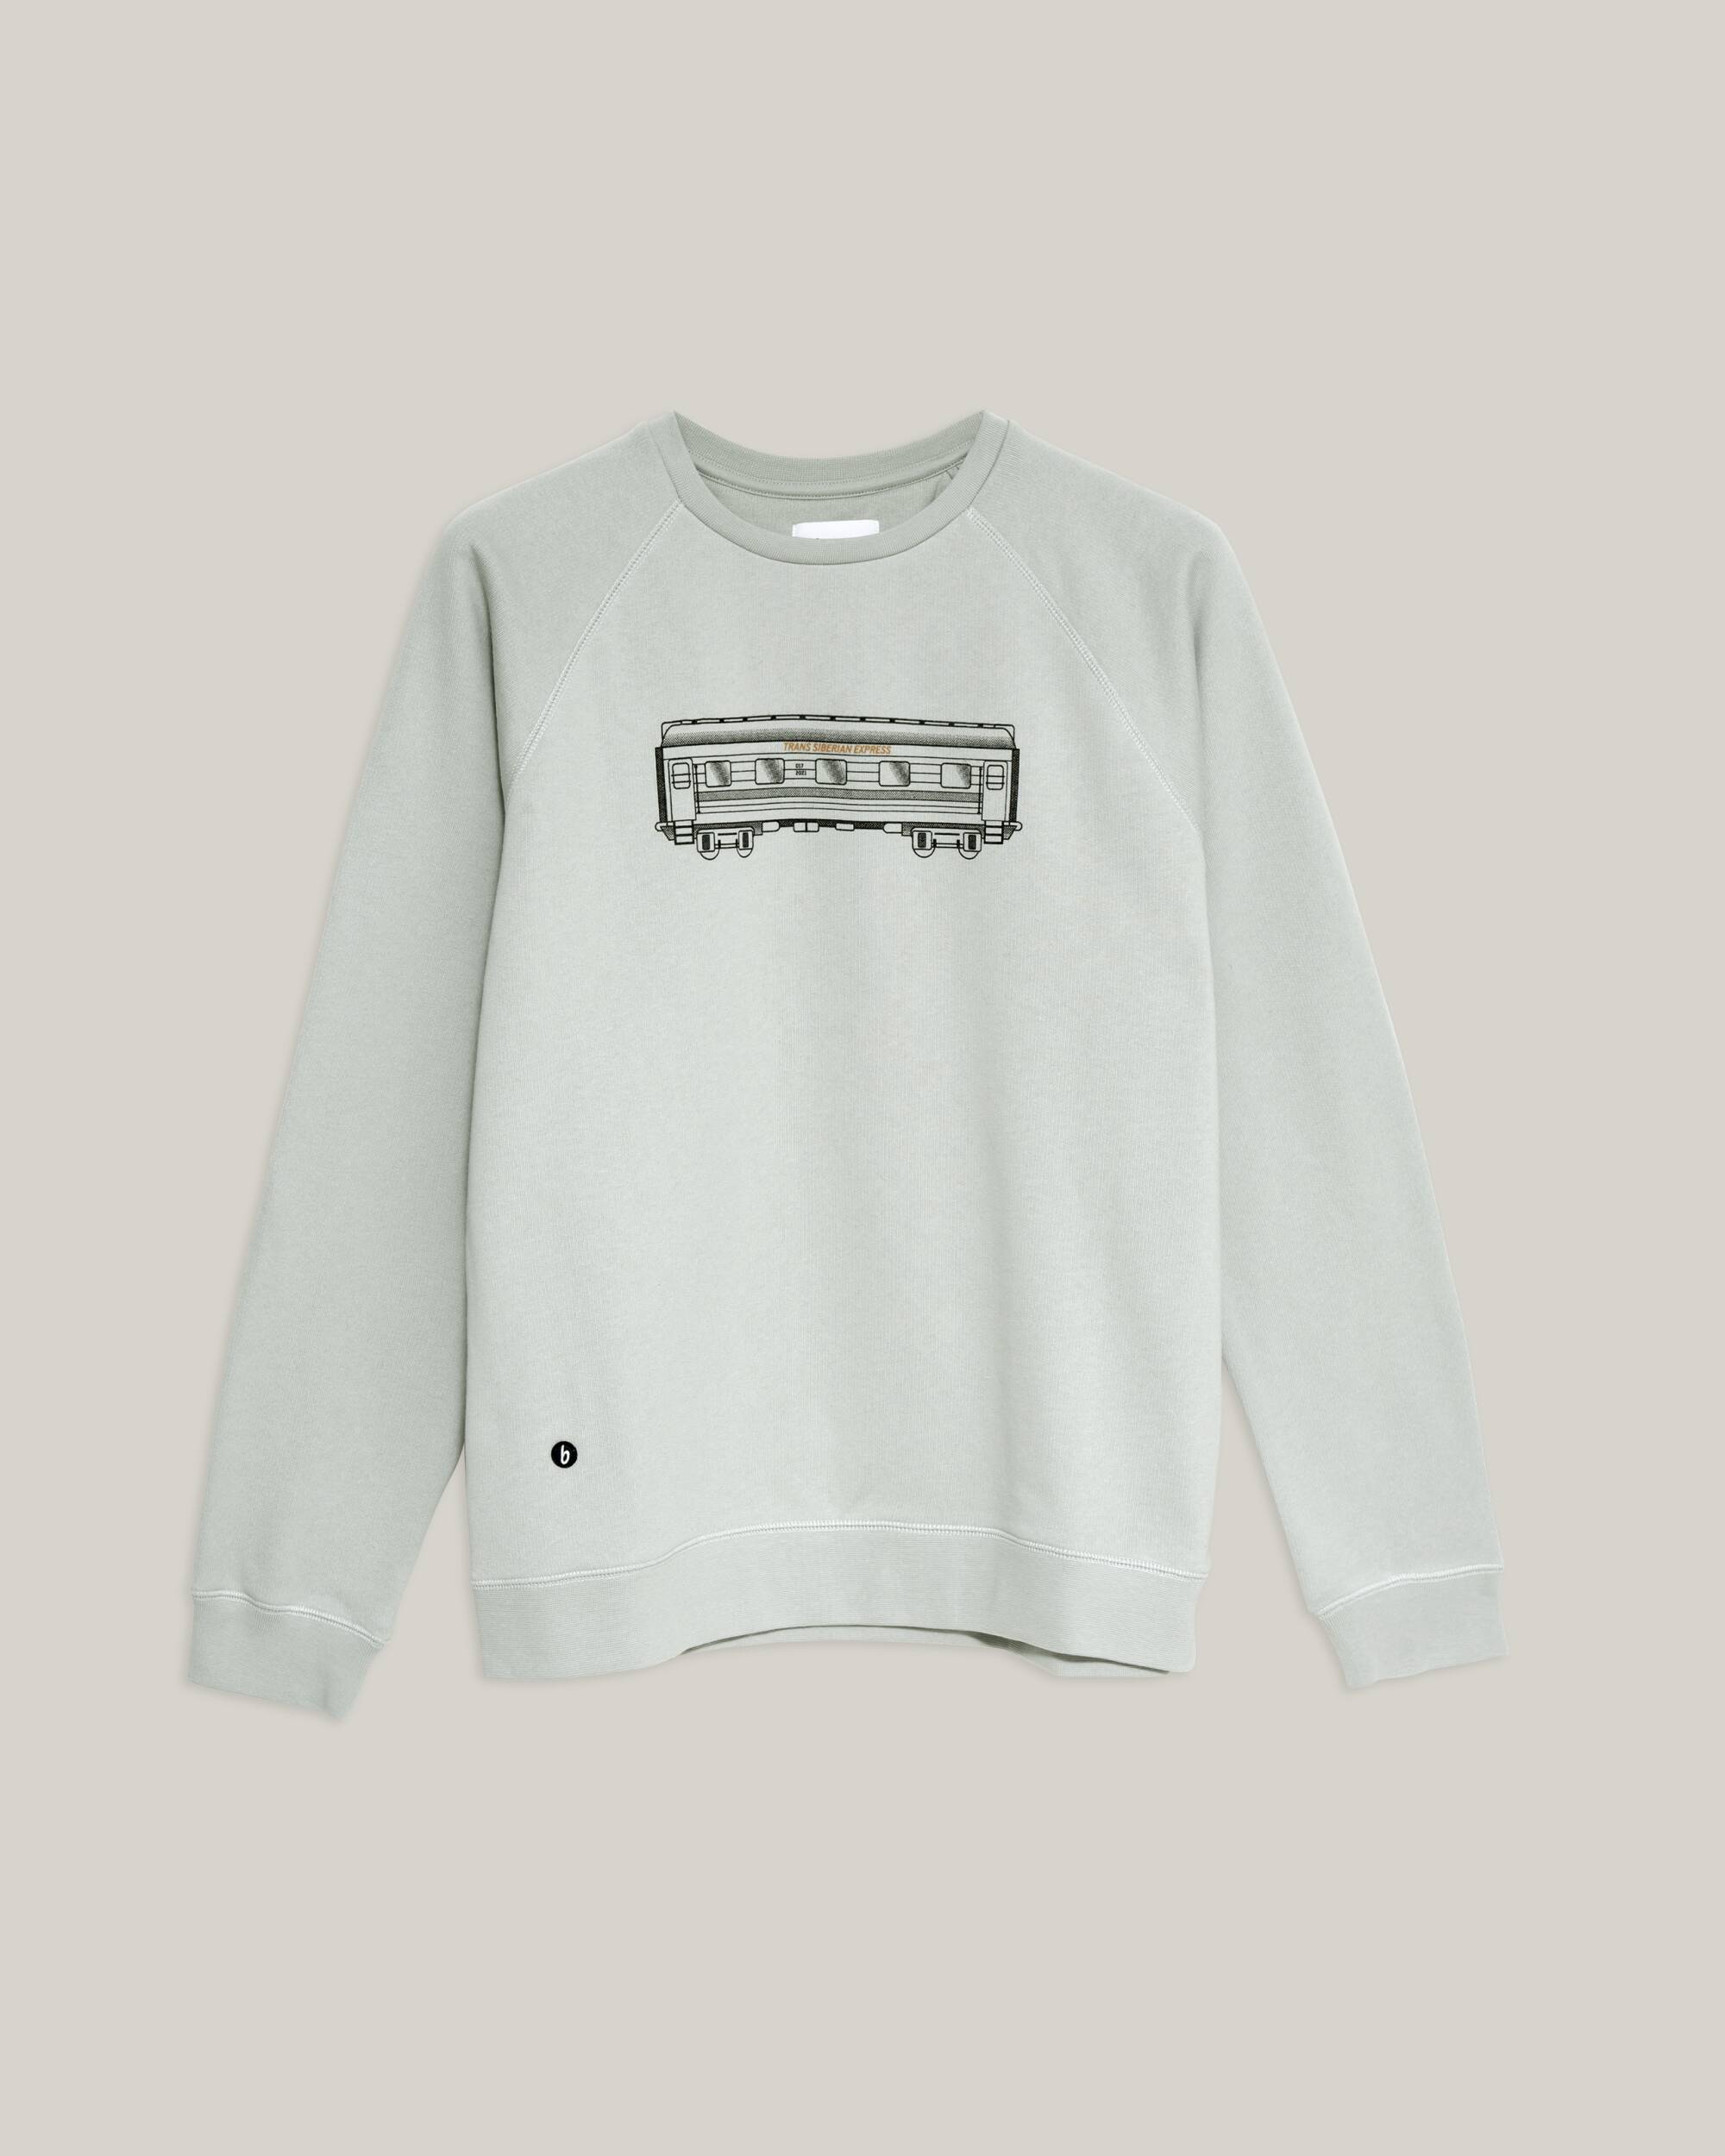 Sweatshirt "Wagon" in gray made from 100% organic cotton from Brava Fabrics